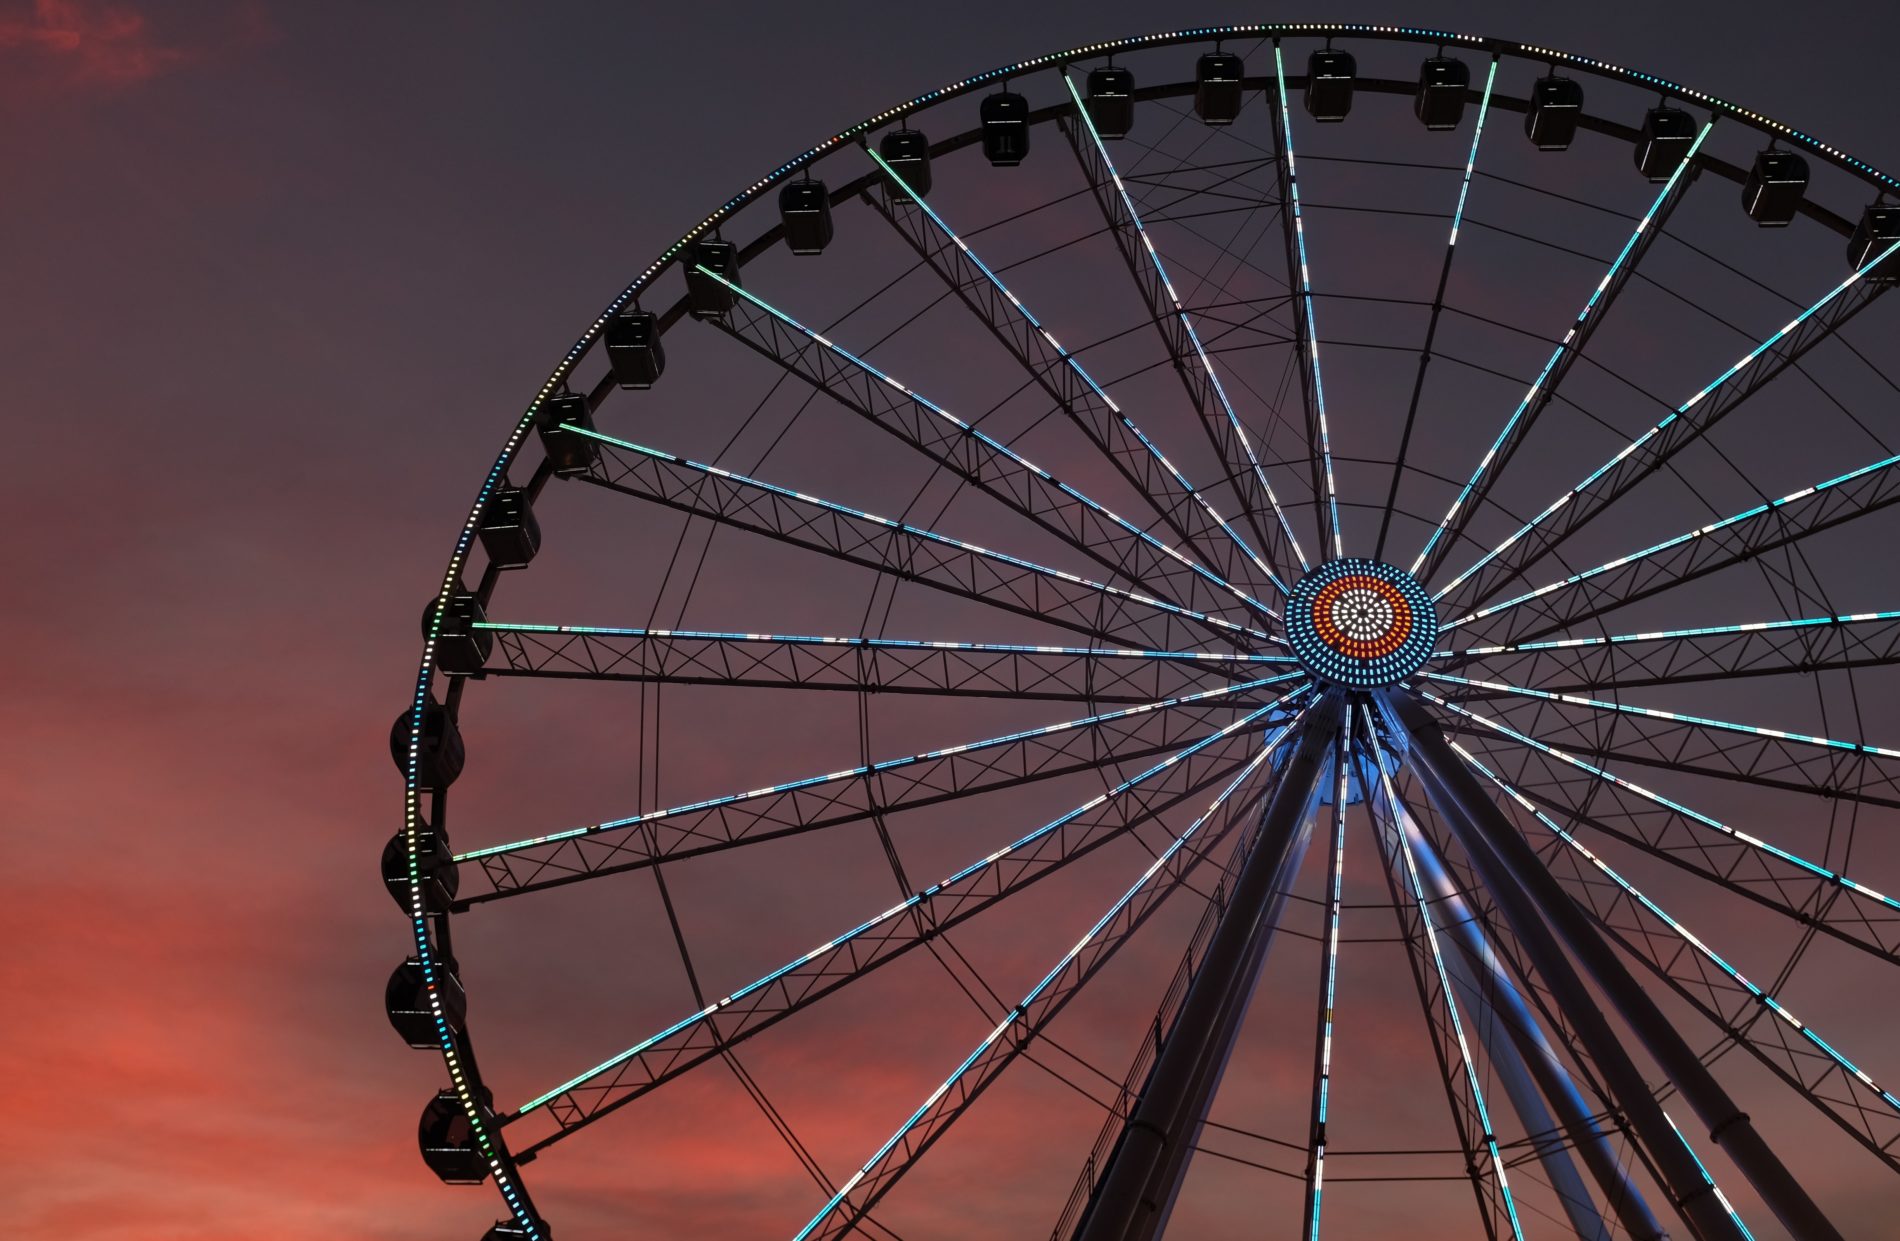 Large ferris wheel lit up at dusk